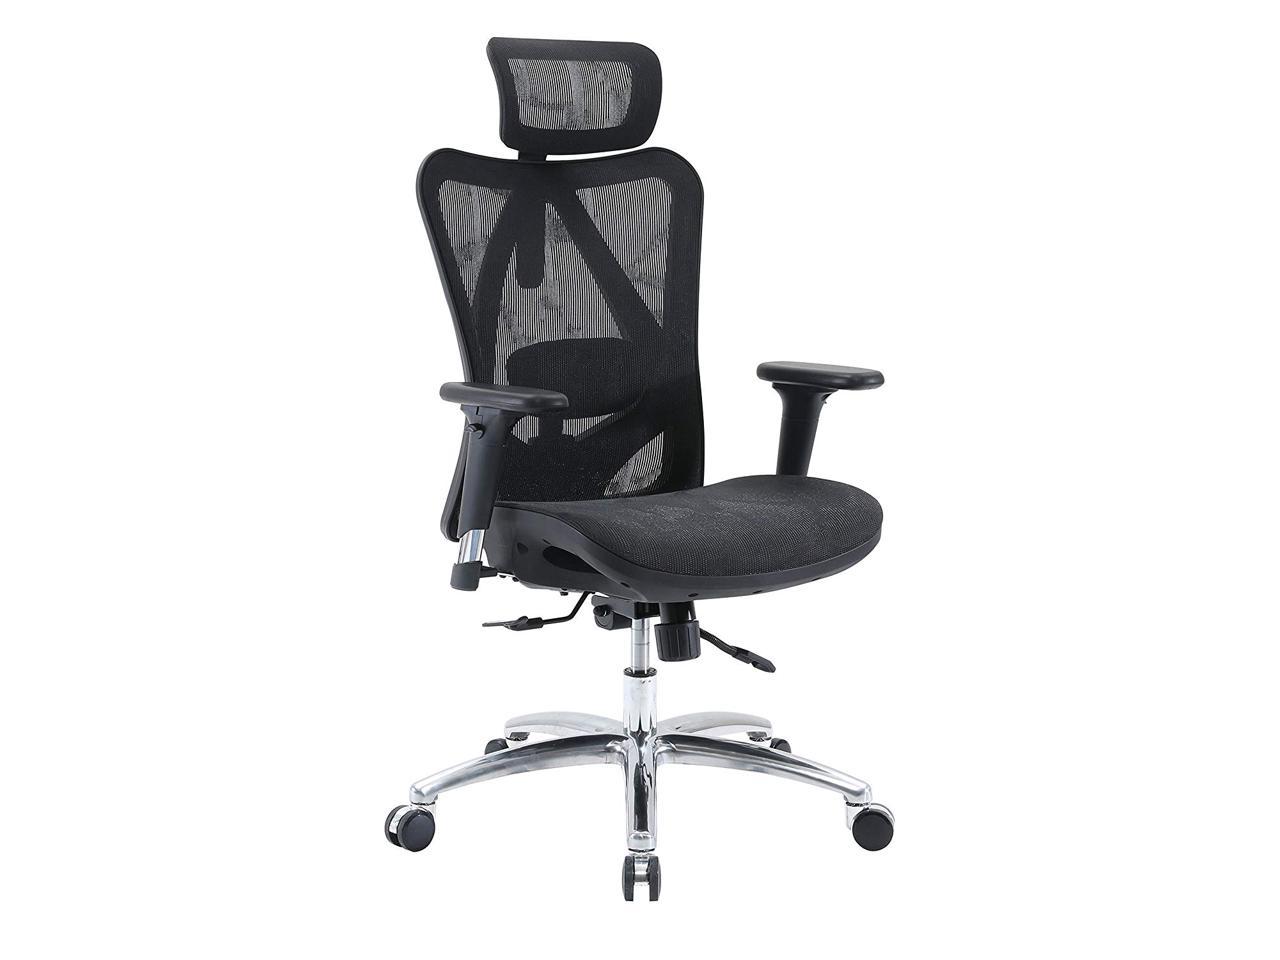 Sihoo M57 Ergonomic Office Chair High Back Computer Desk Chair Breathable Mesh Chair Adjustable 3d Armrest And Lumbar Support Black Newegg Com